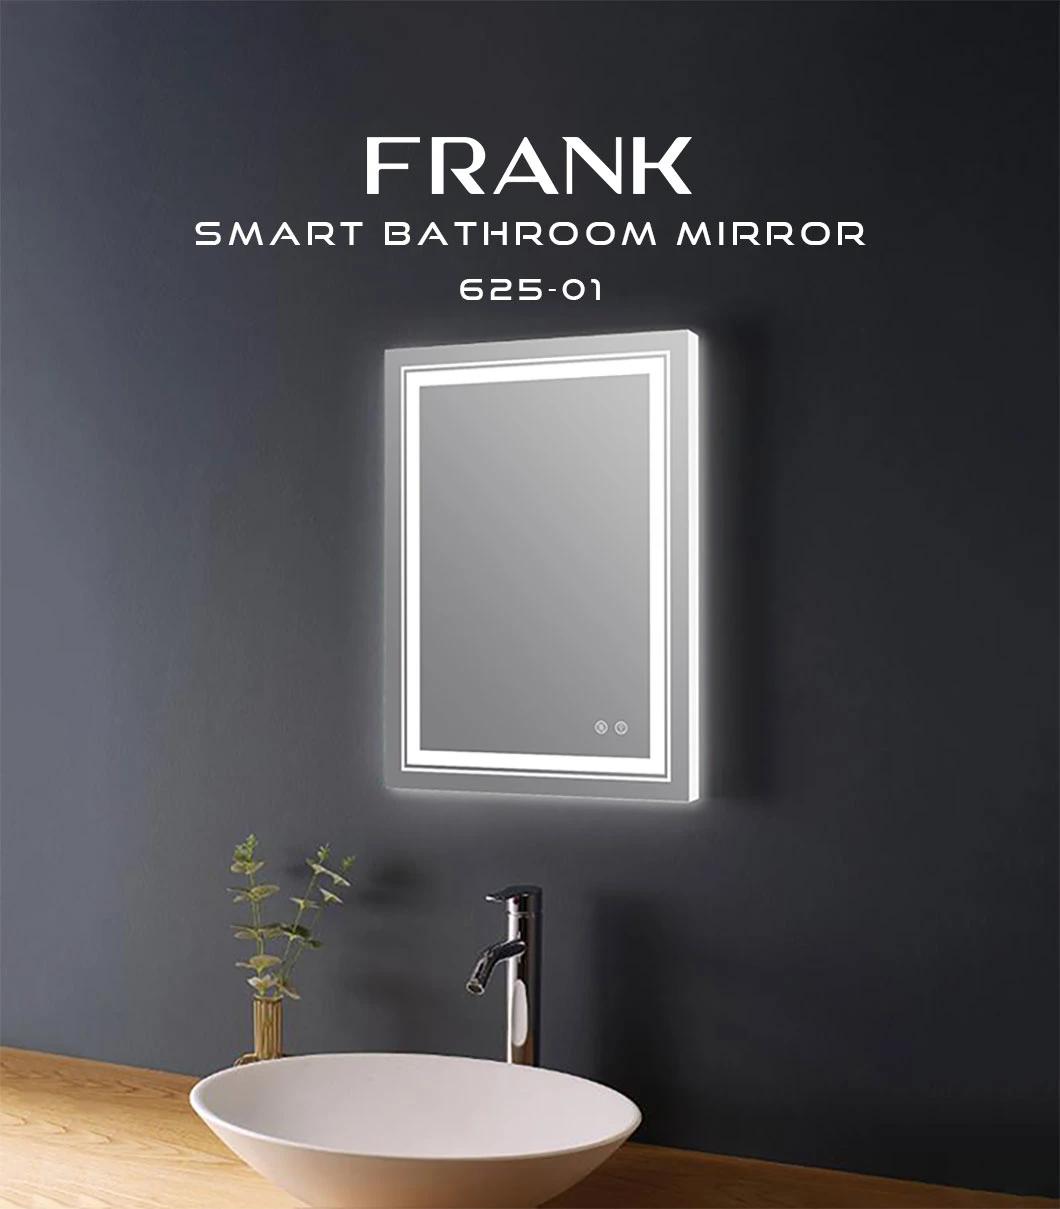 Clear Glass Bathroom Mirror LED Light Salon Furniture